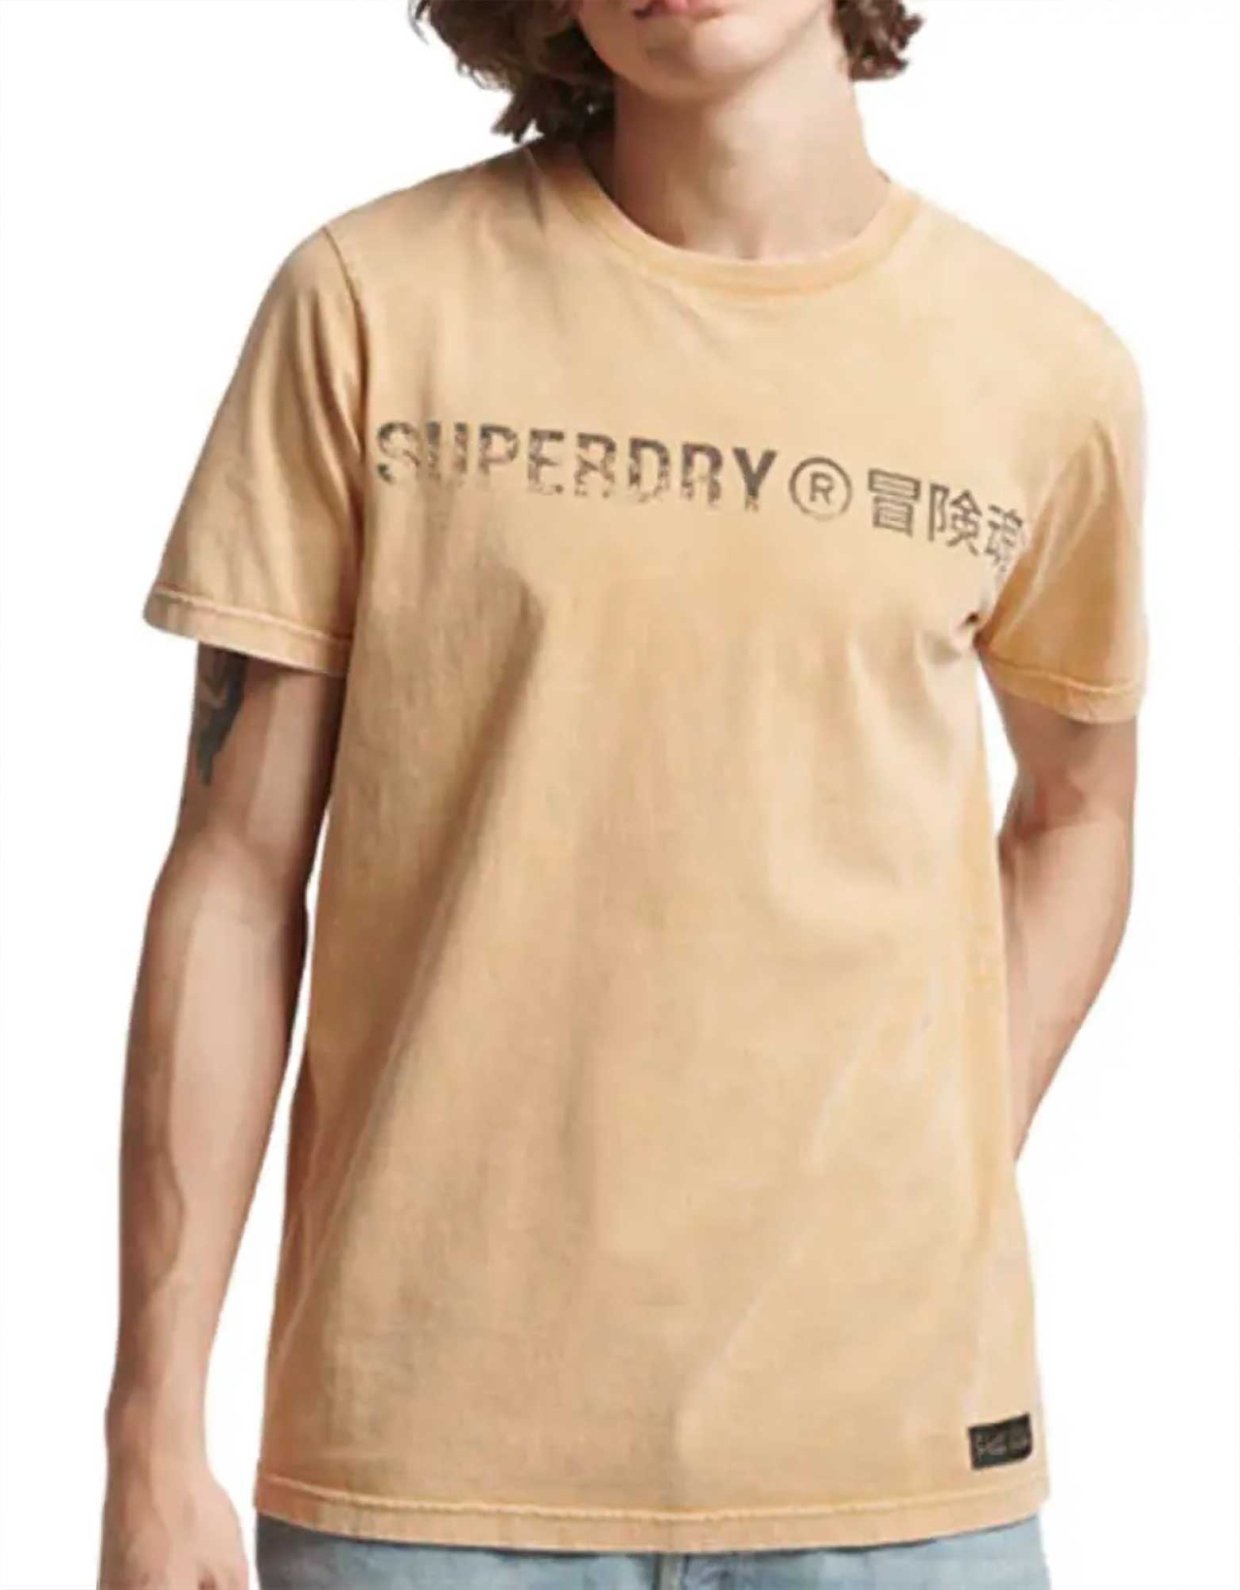 Superdry Vintage corp logo tee dried clay brown